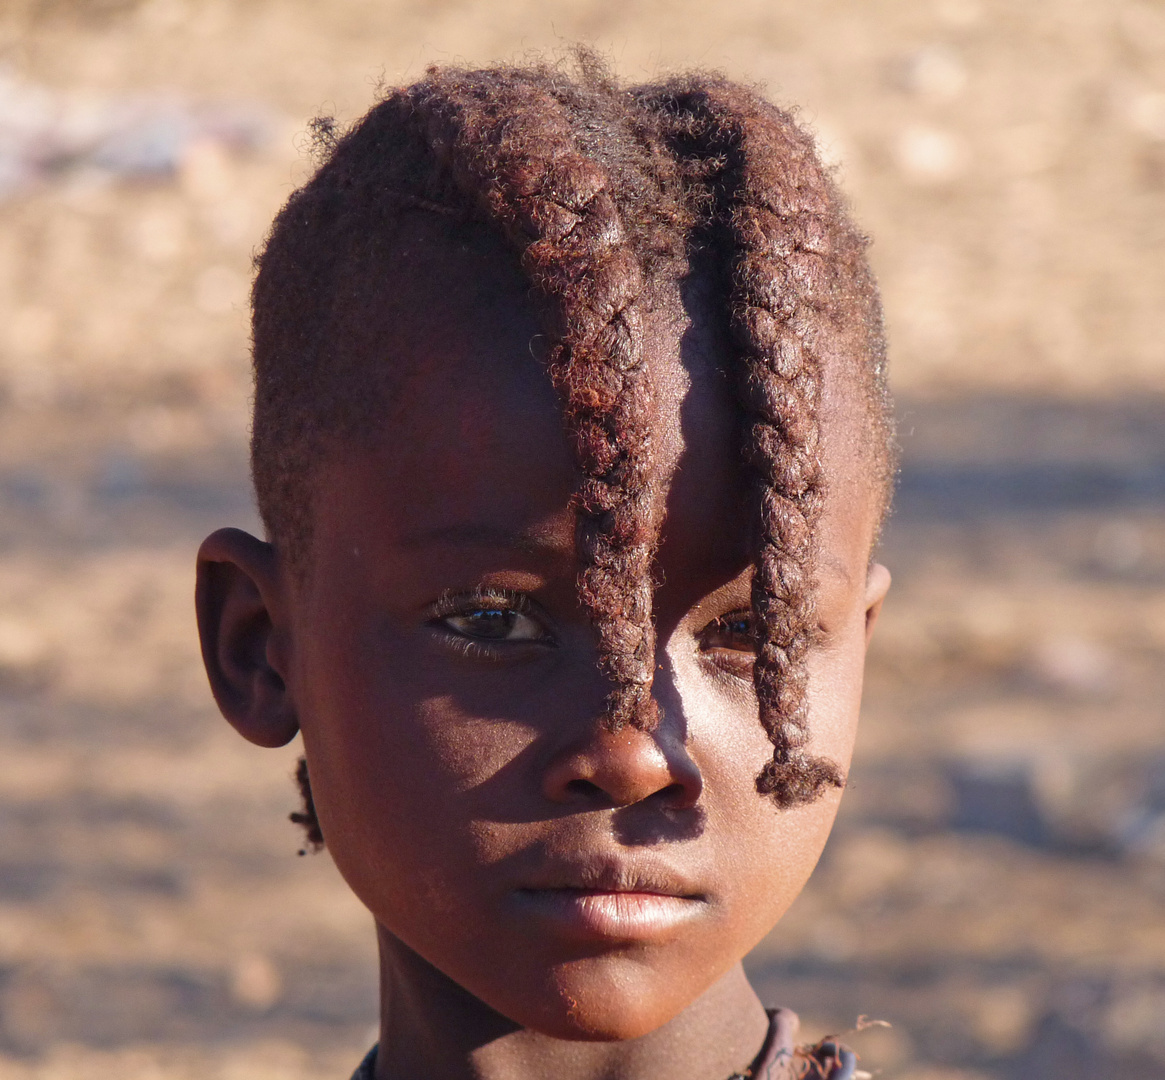 Himbamädchen 2